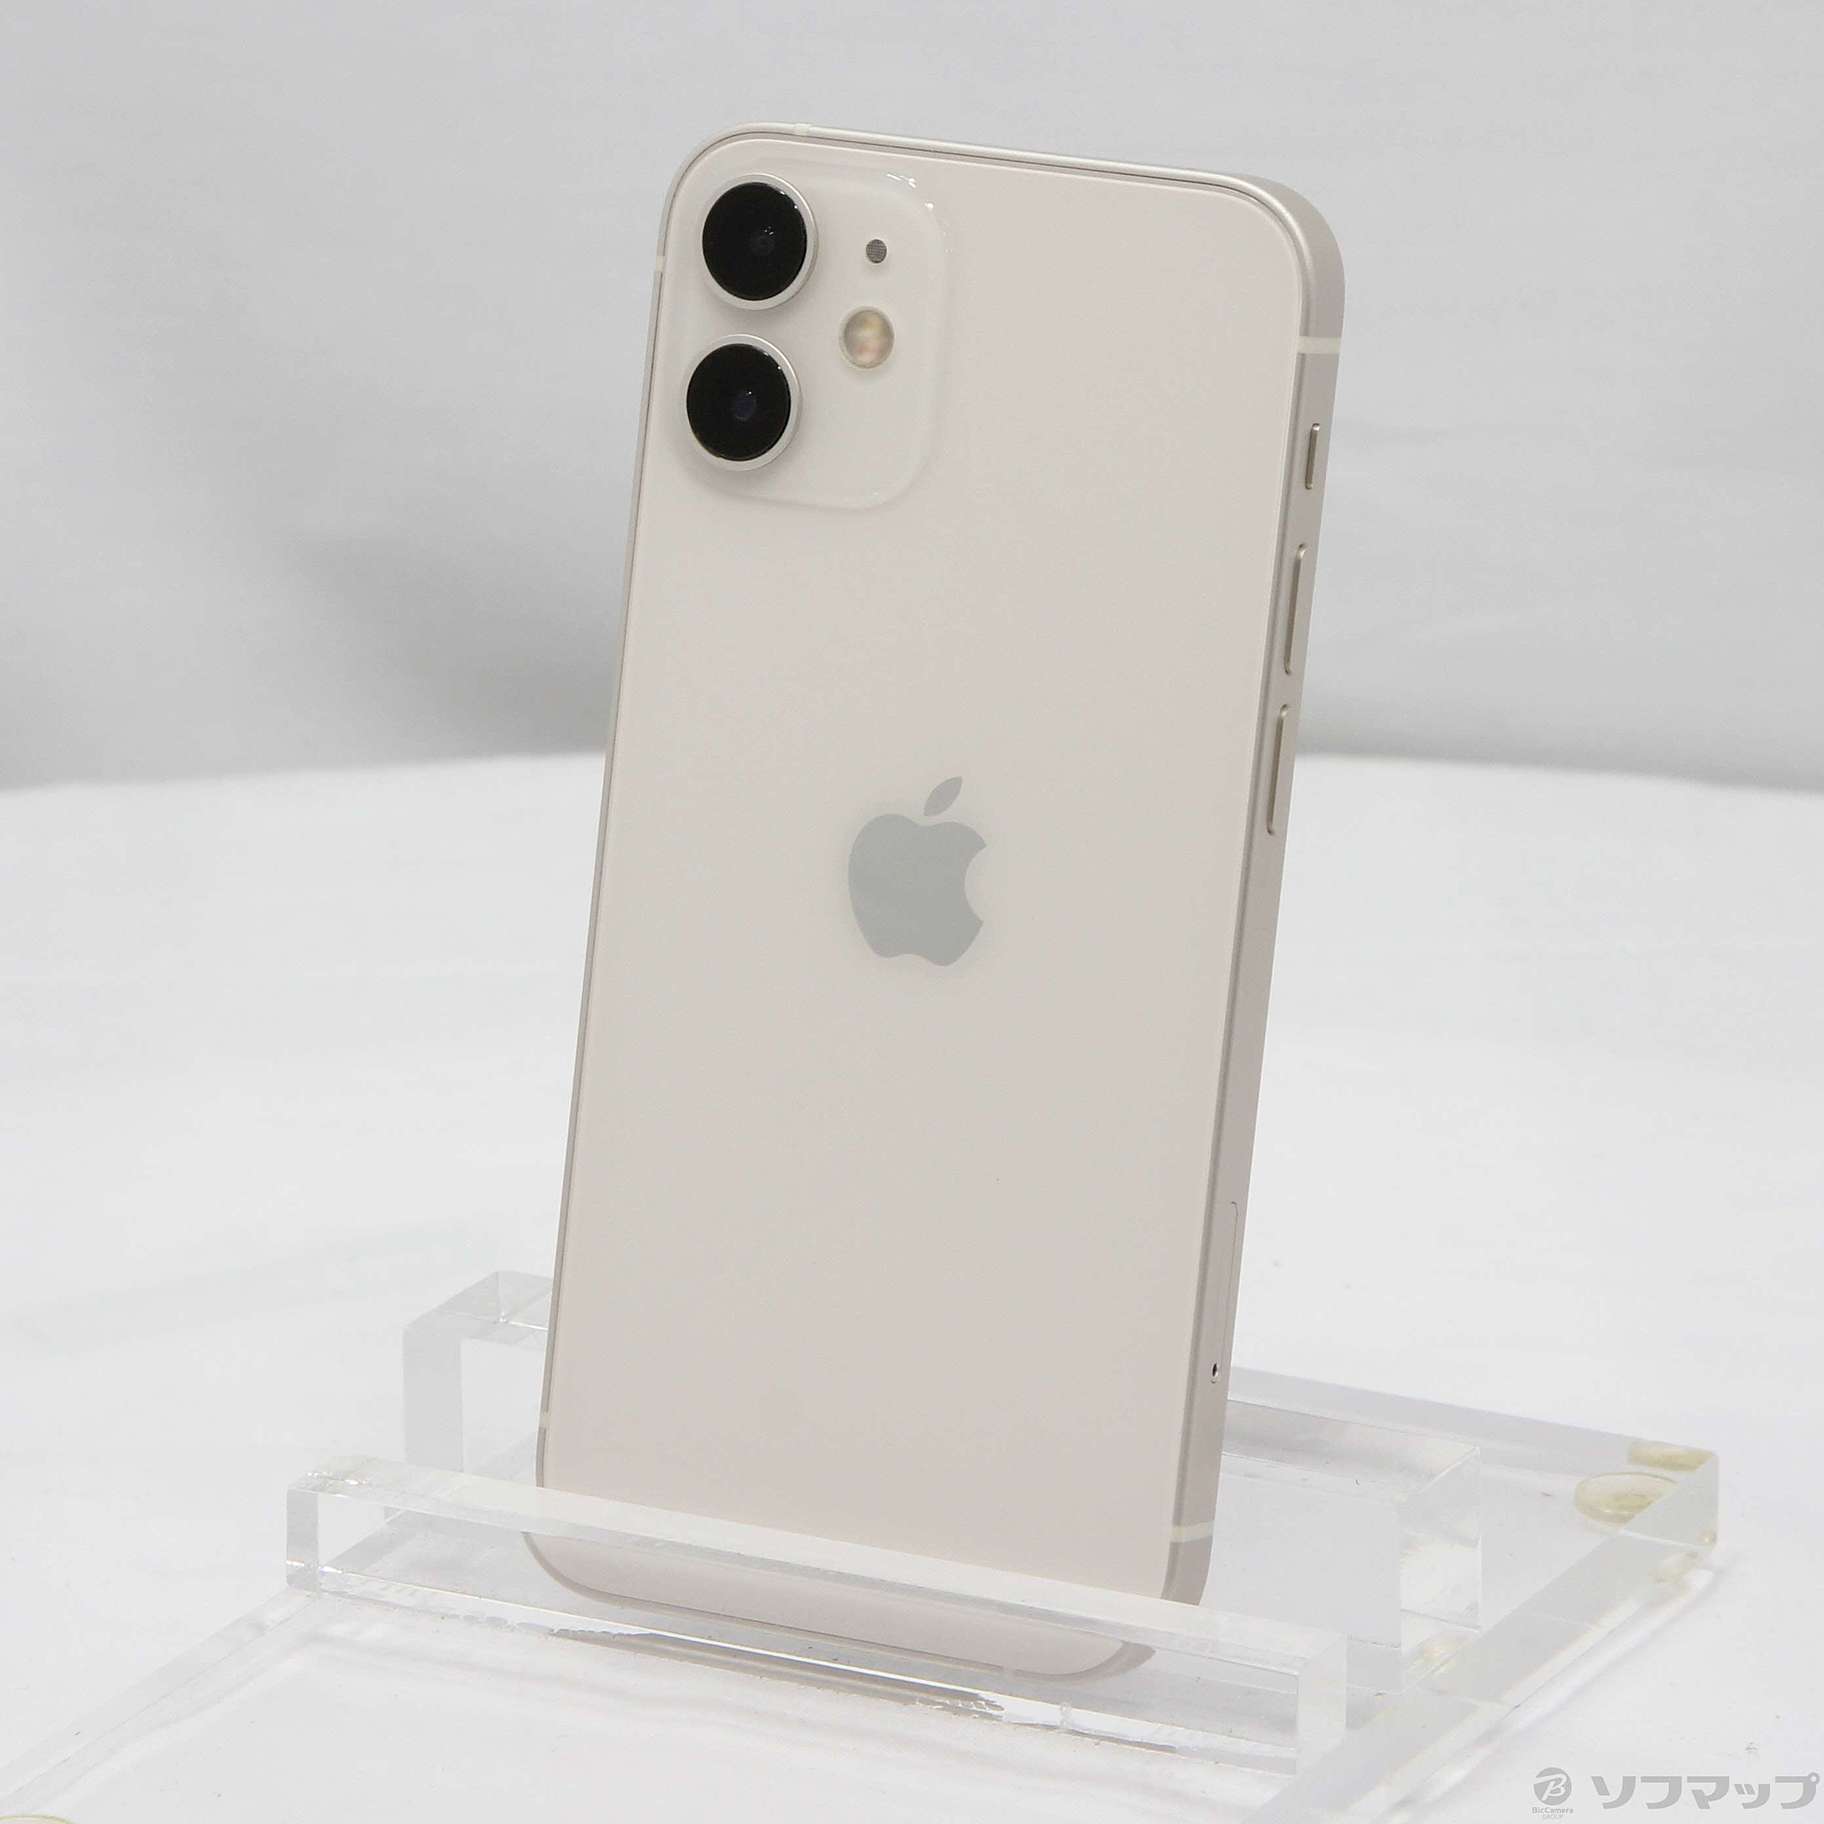 iPhone 12 mini 64GB SIMフリー [ホワイト] 中古(白ロム)価格比較